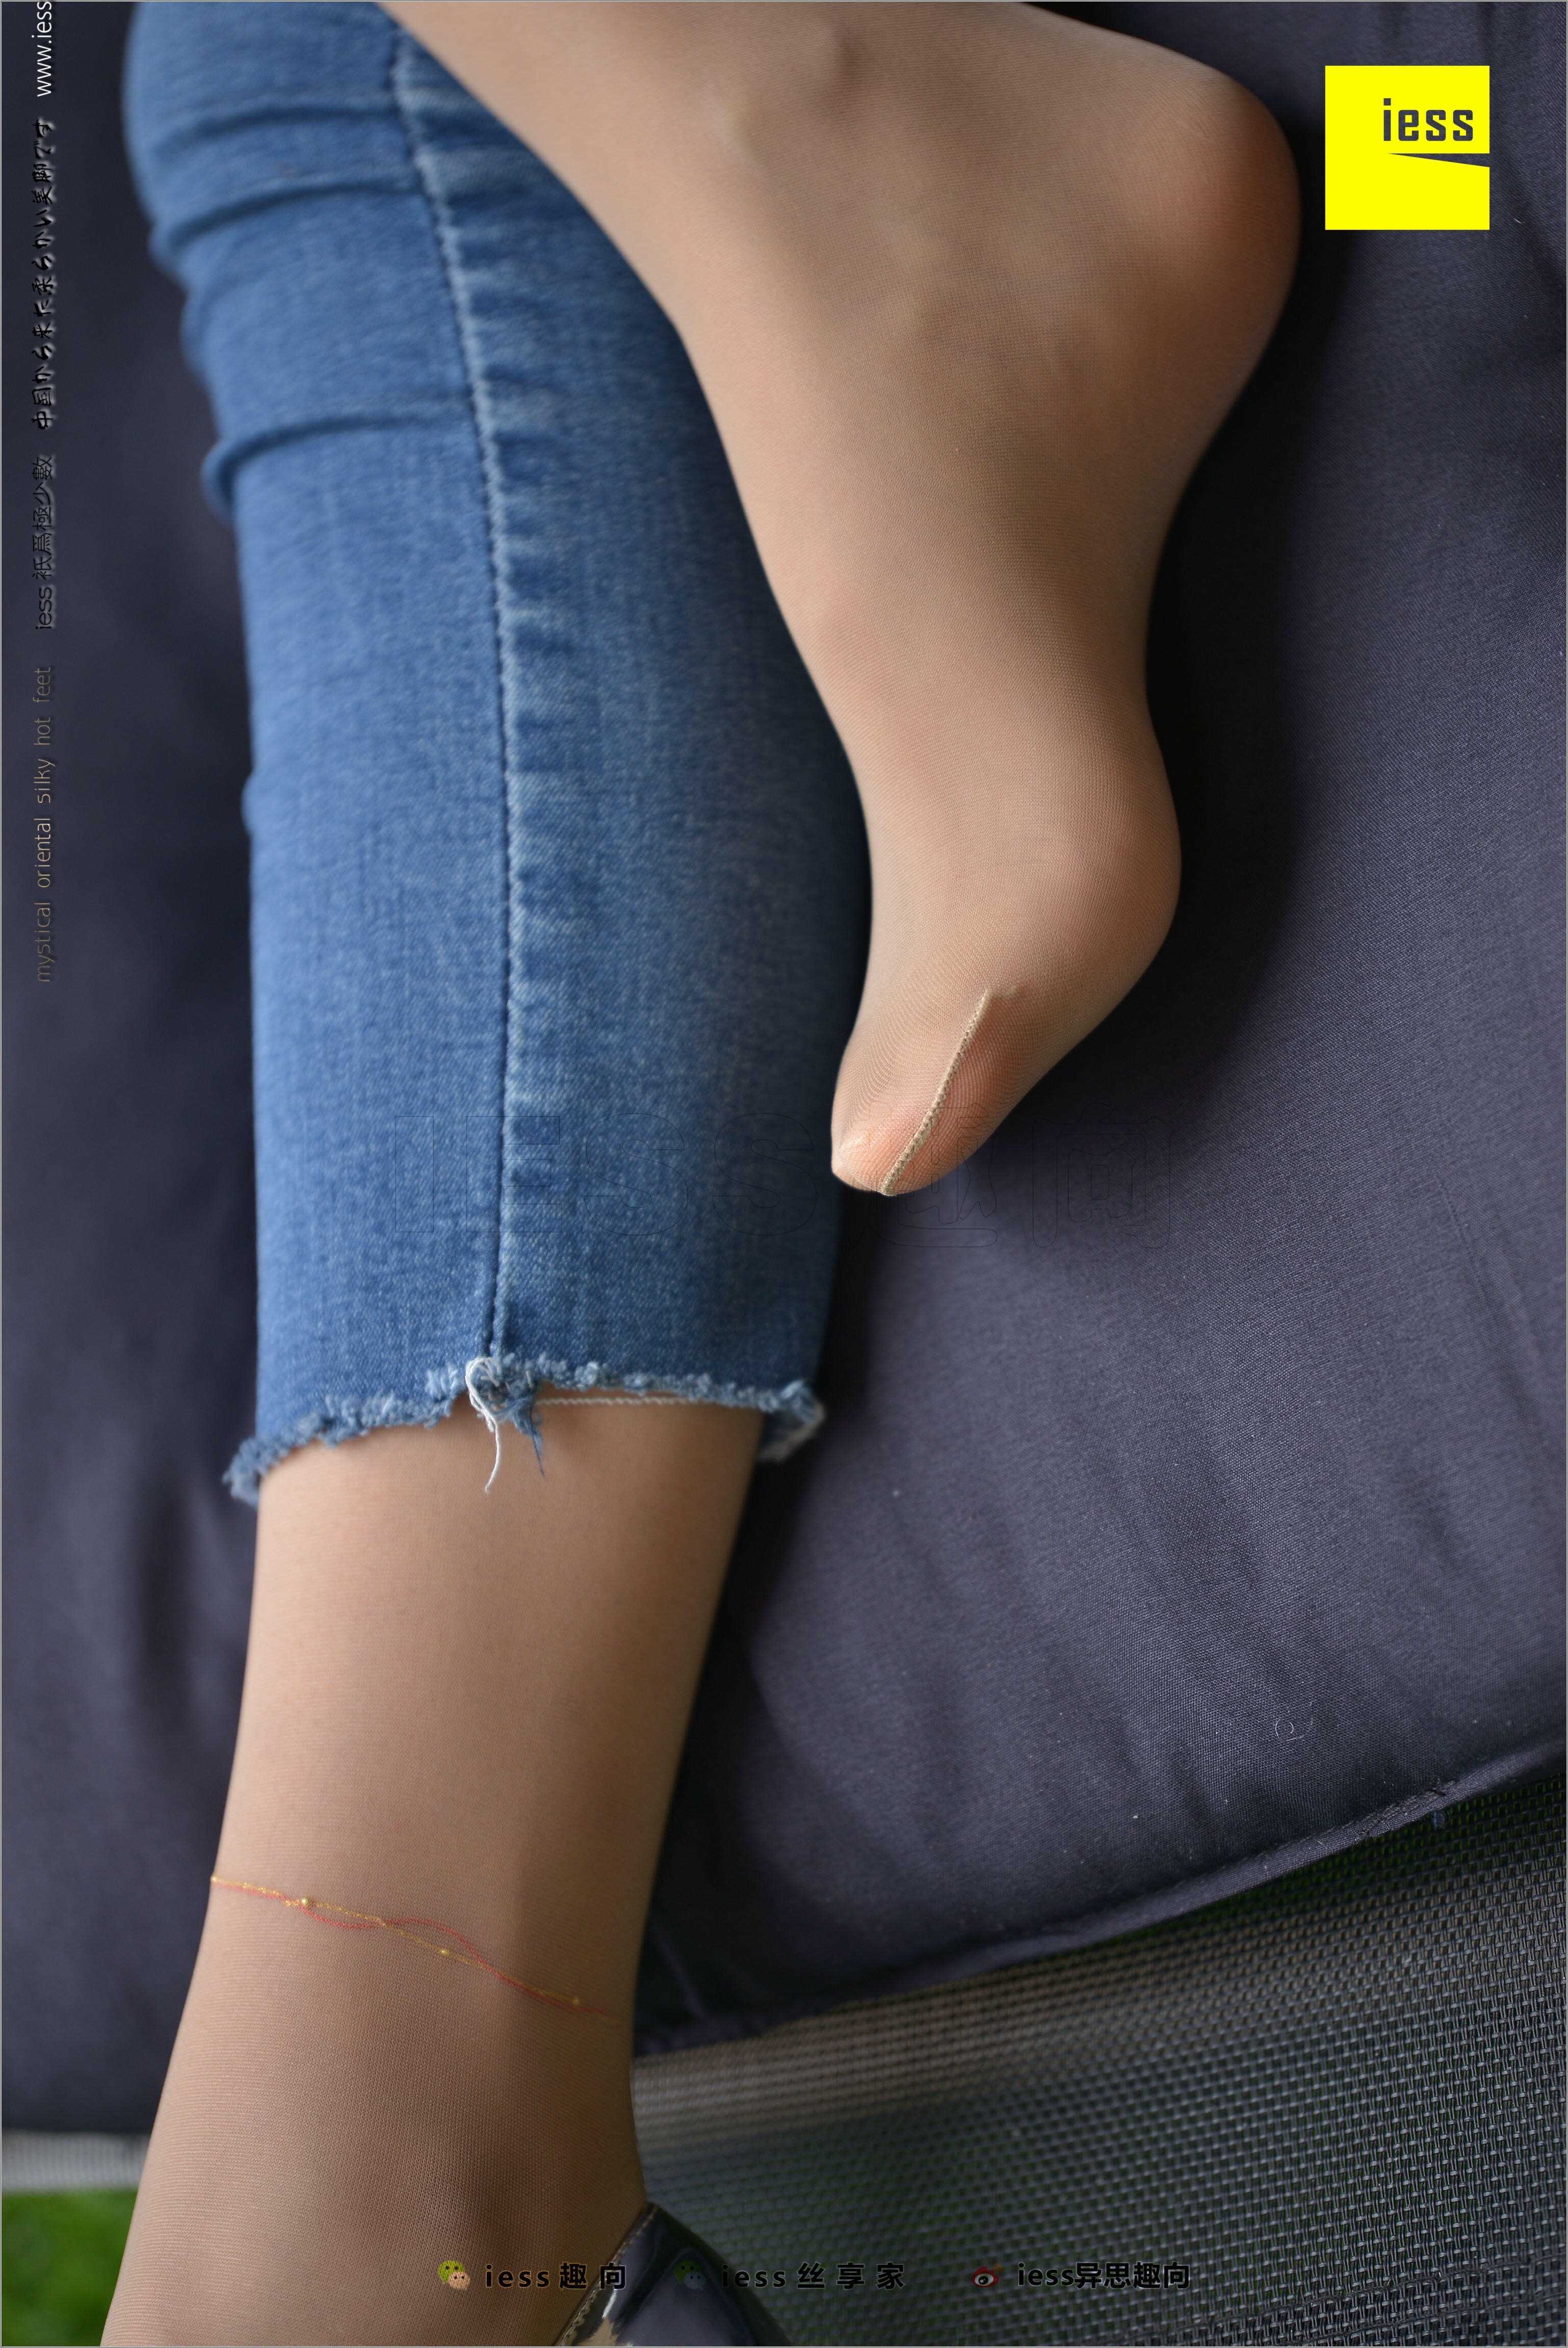 China Beauty Legs and feet 487